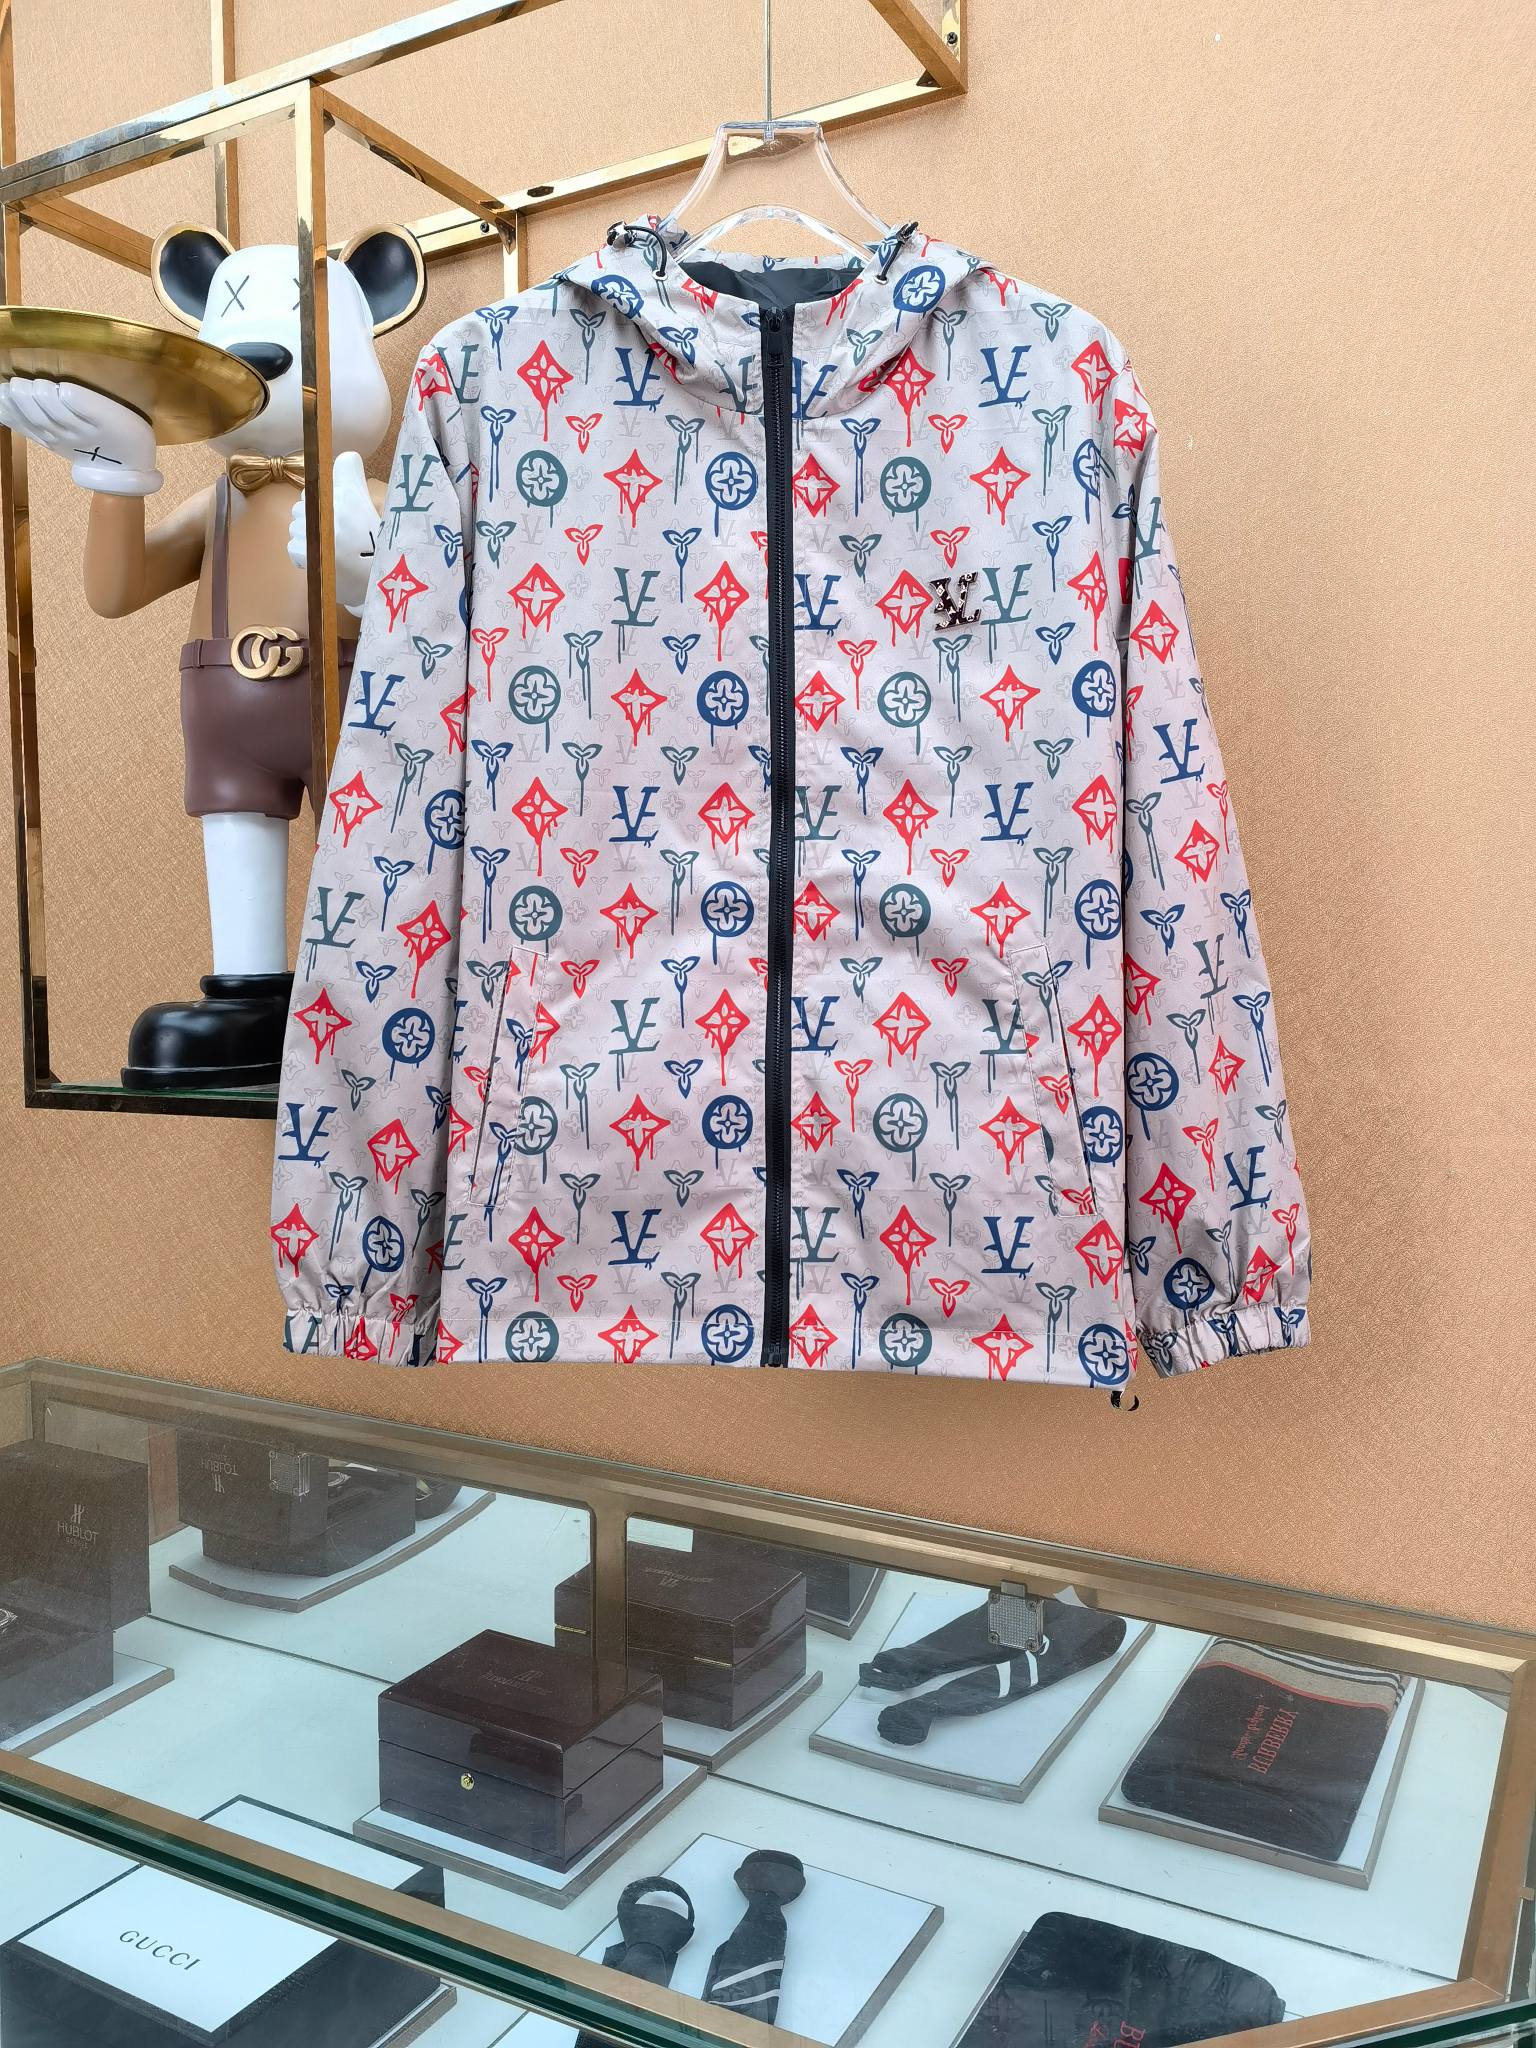 Louis Vuitton Clothing Coats & Jackets Men Fall Collection Casual